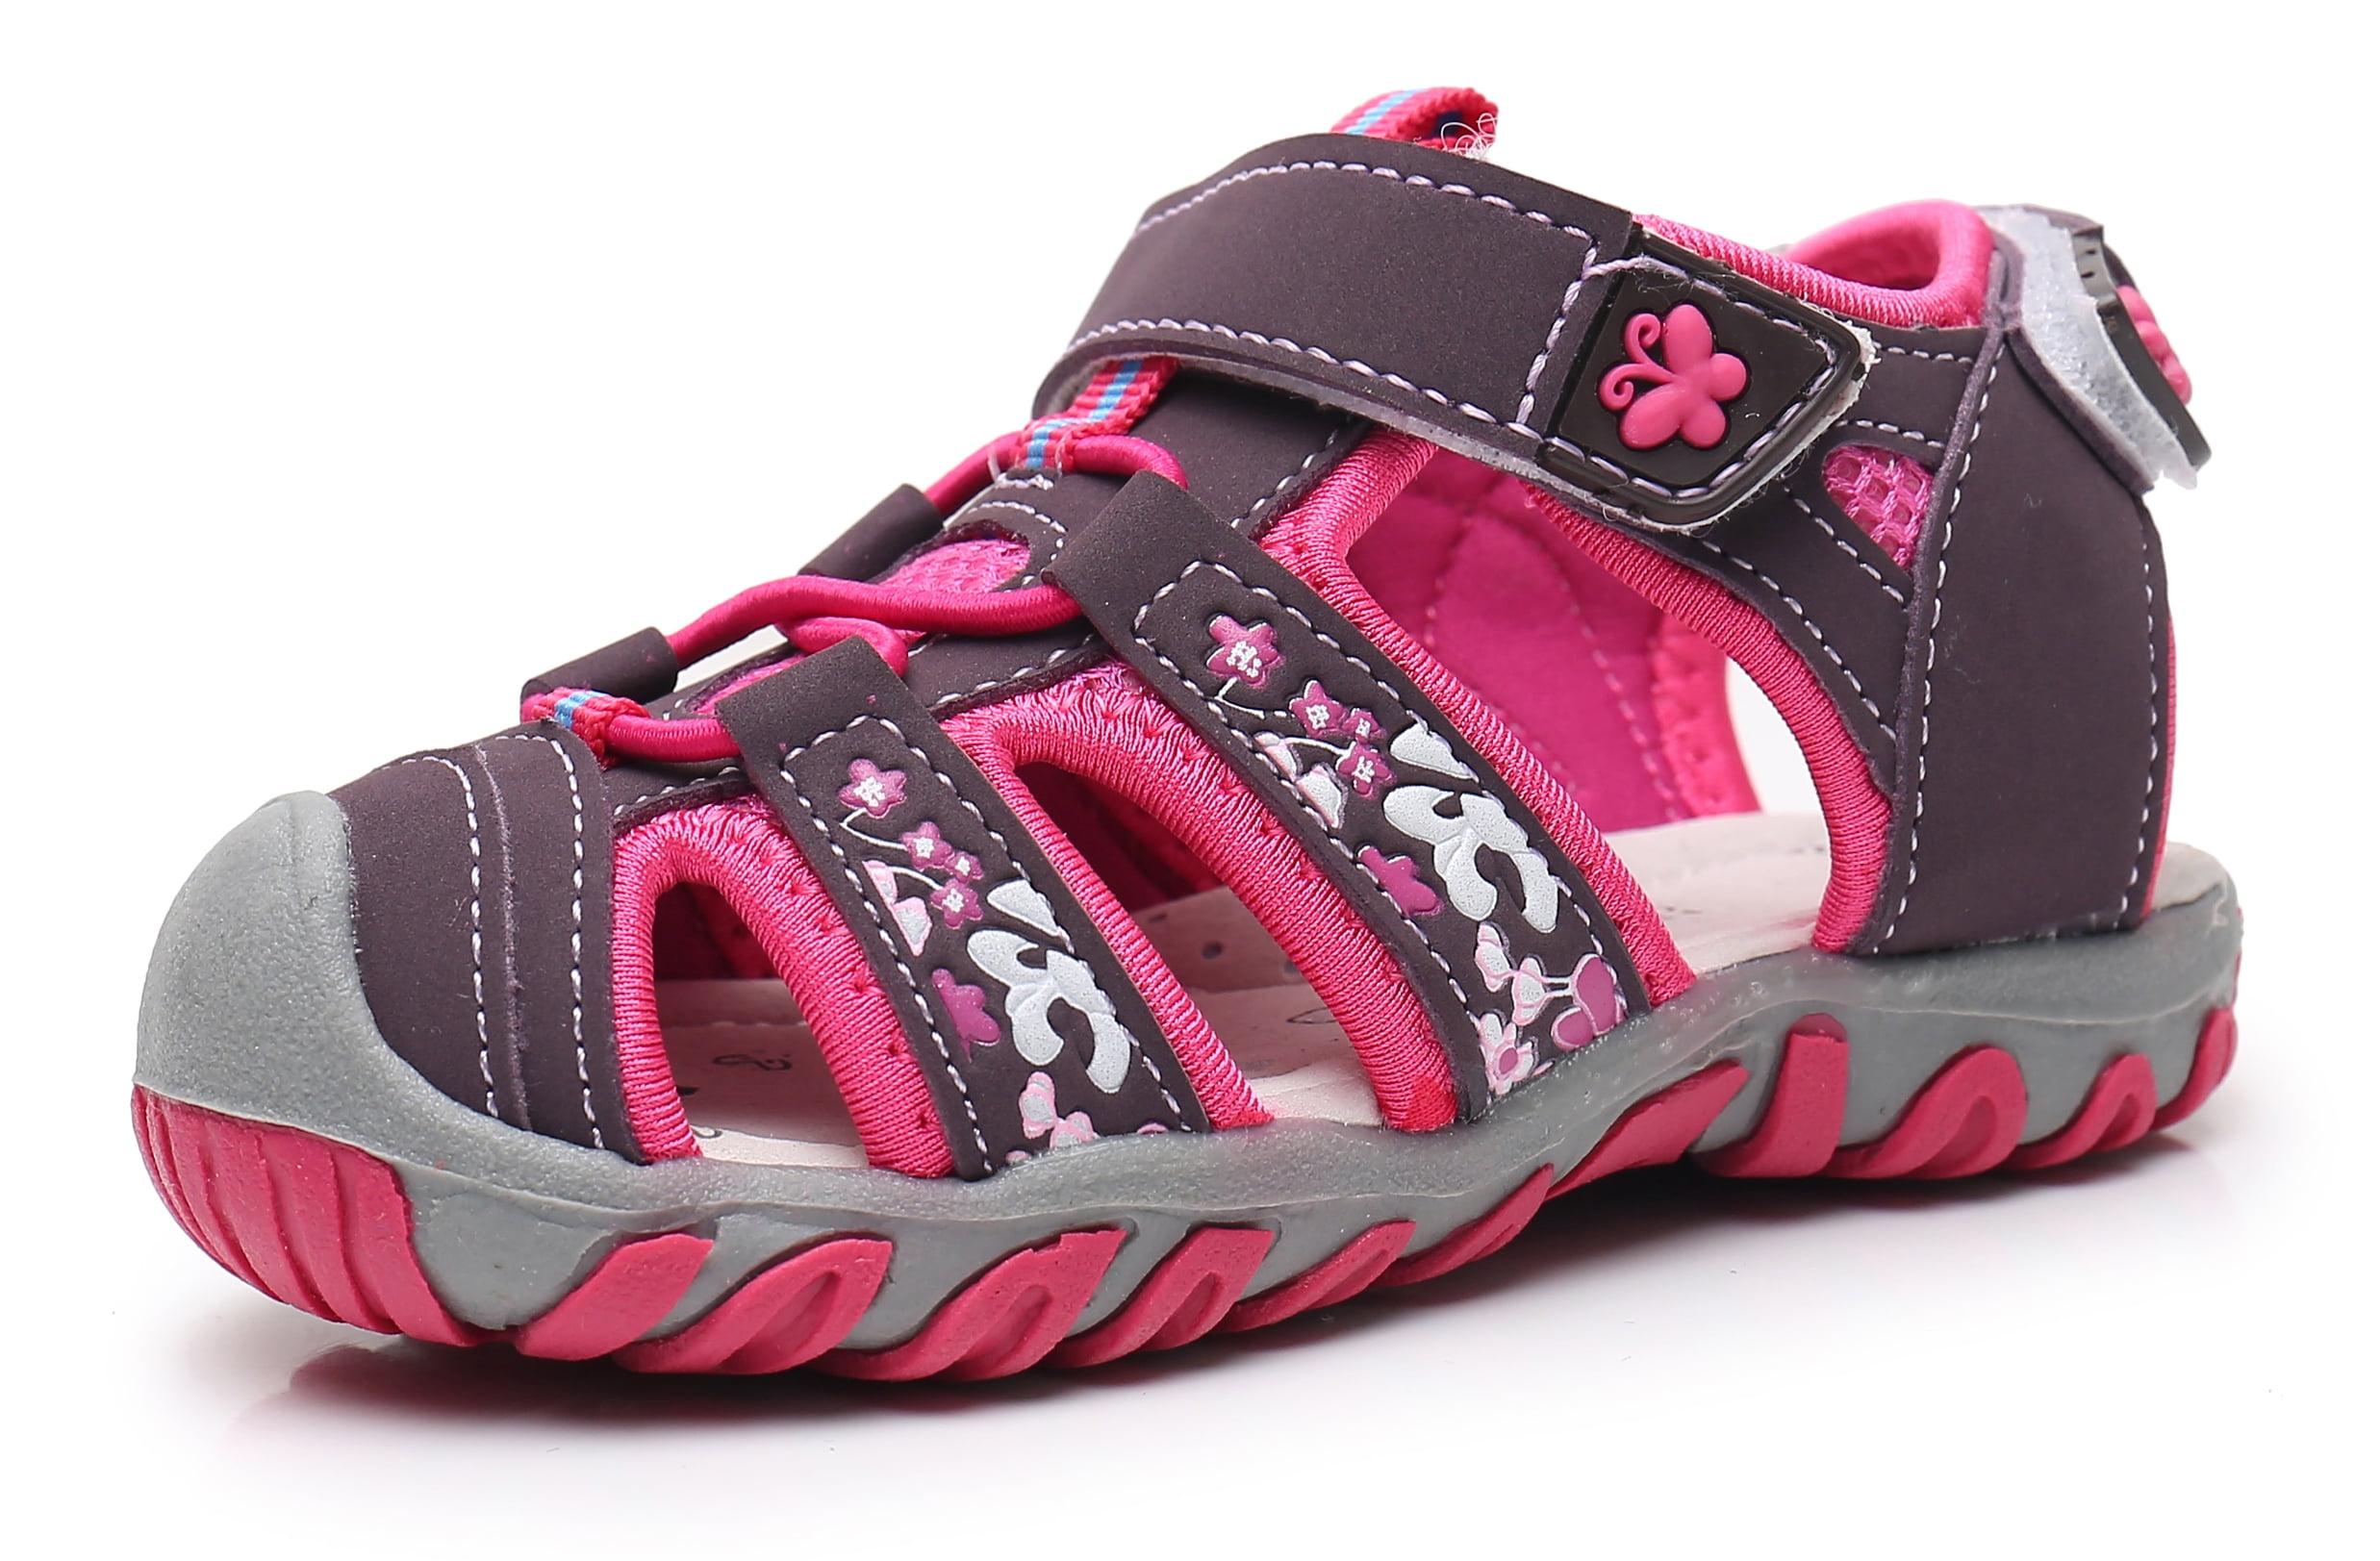 Toddler/Little Kid Apakowa Kid's Boy's Girls's Soft Sole Close Toe Sport Beach Sandals 